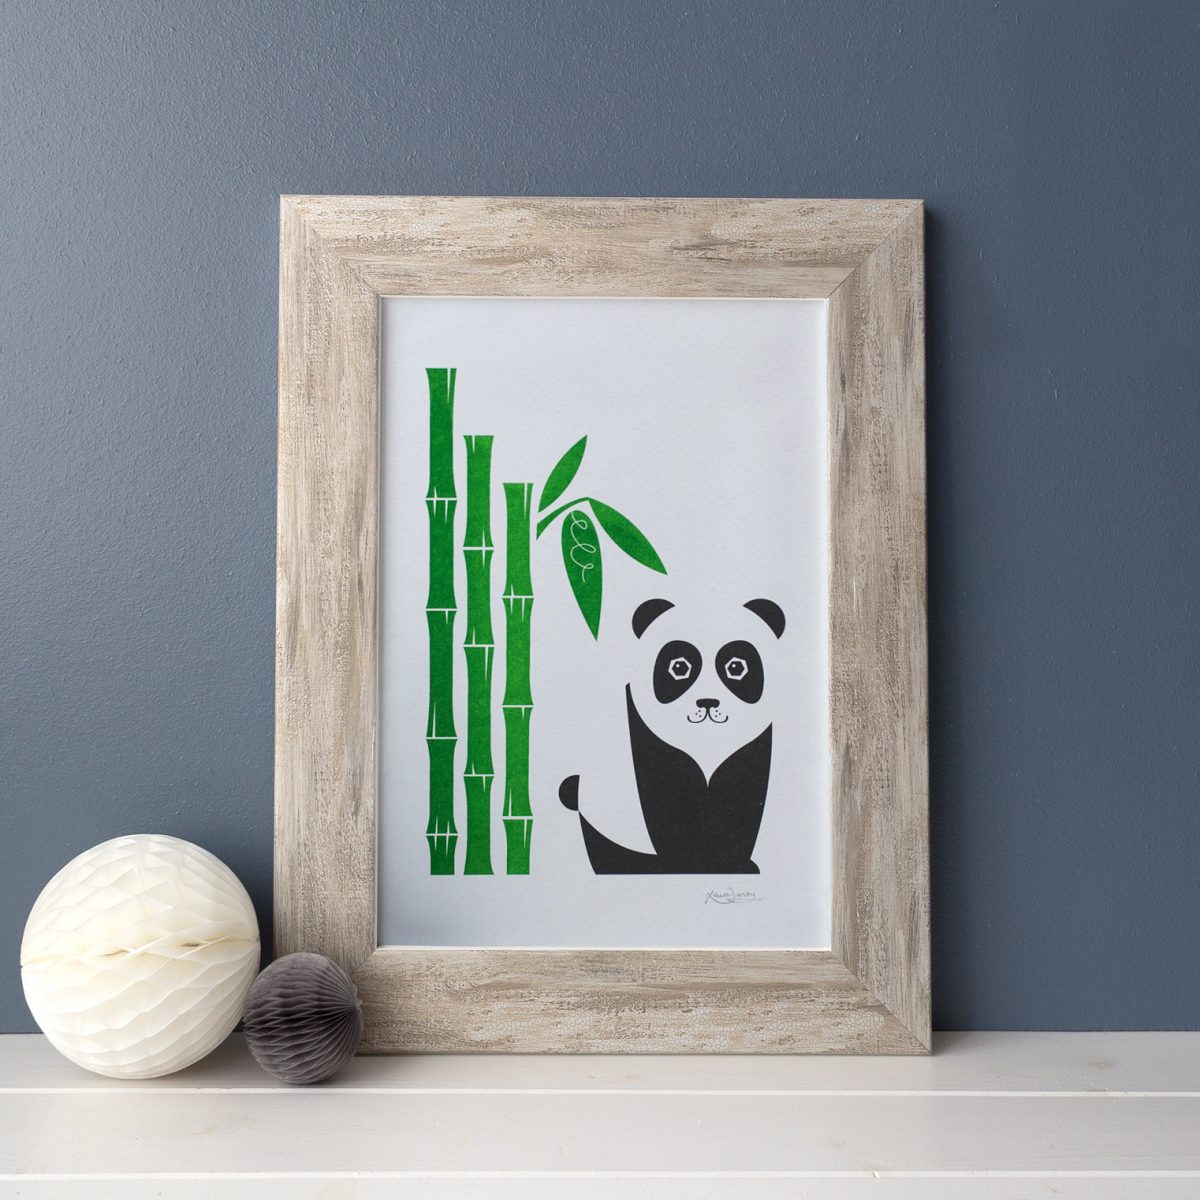 Panda Print, Animal Poster, Panda Gifts, Nursery Decor, Black White, Bear Wall Art, Gift for Kids, Scandinavian Design, Riso Print for Girls